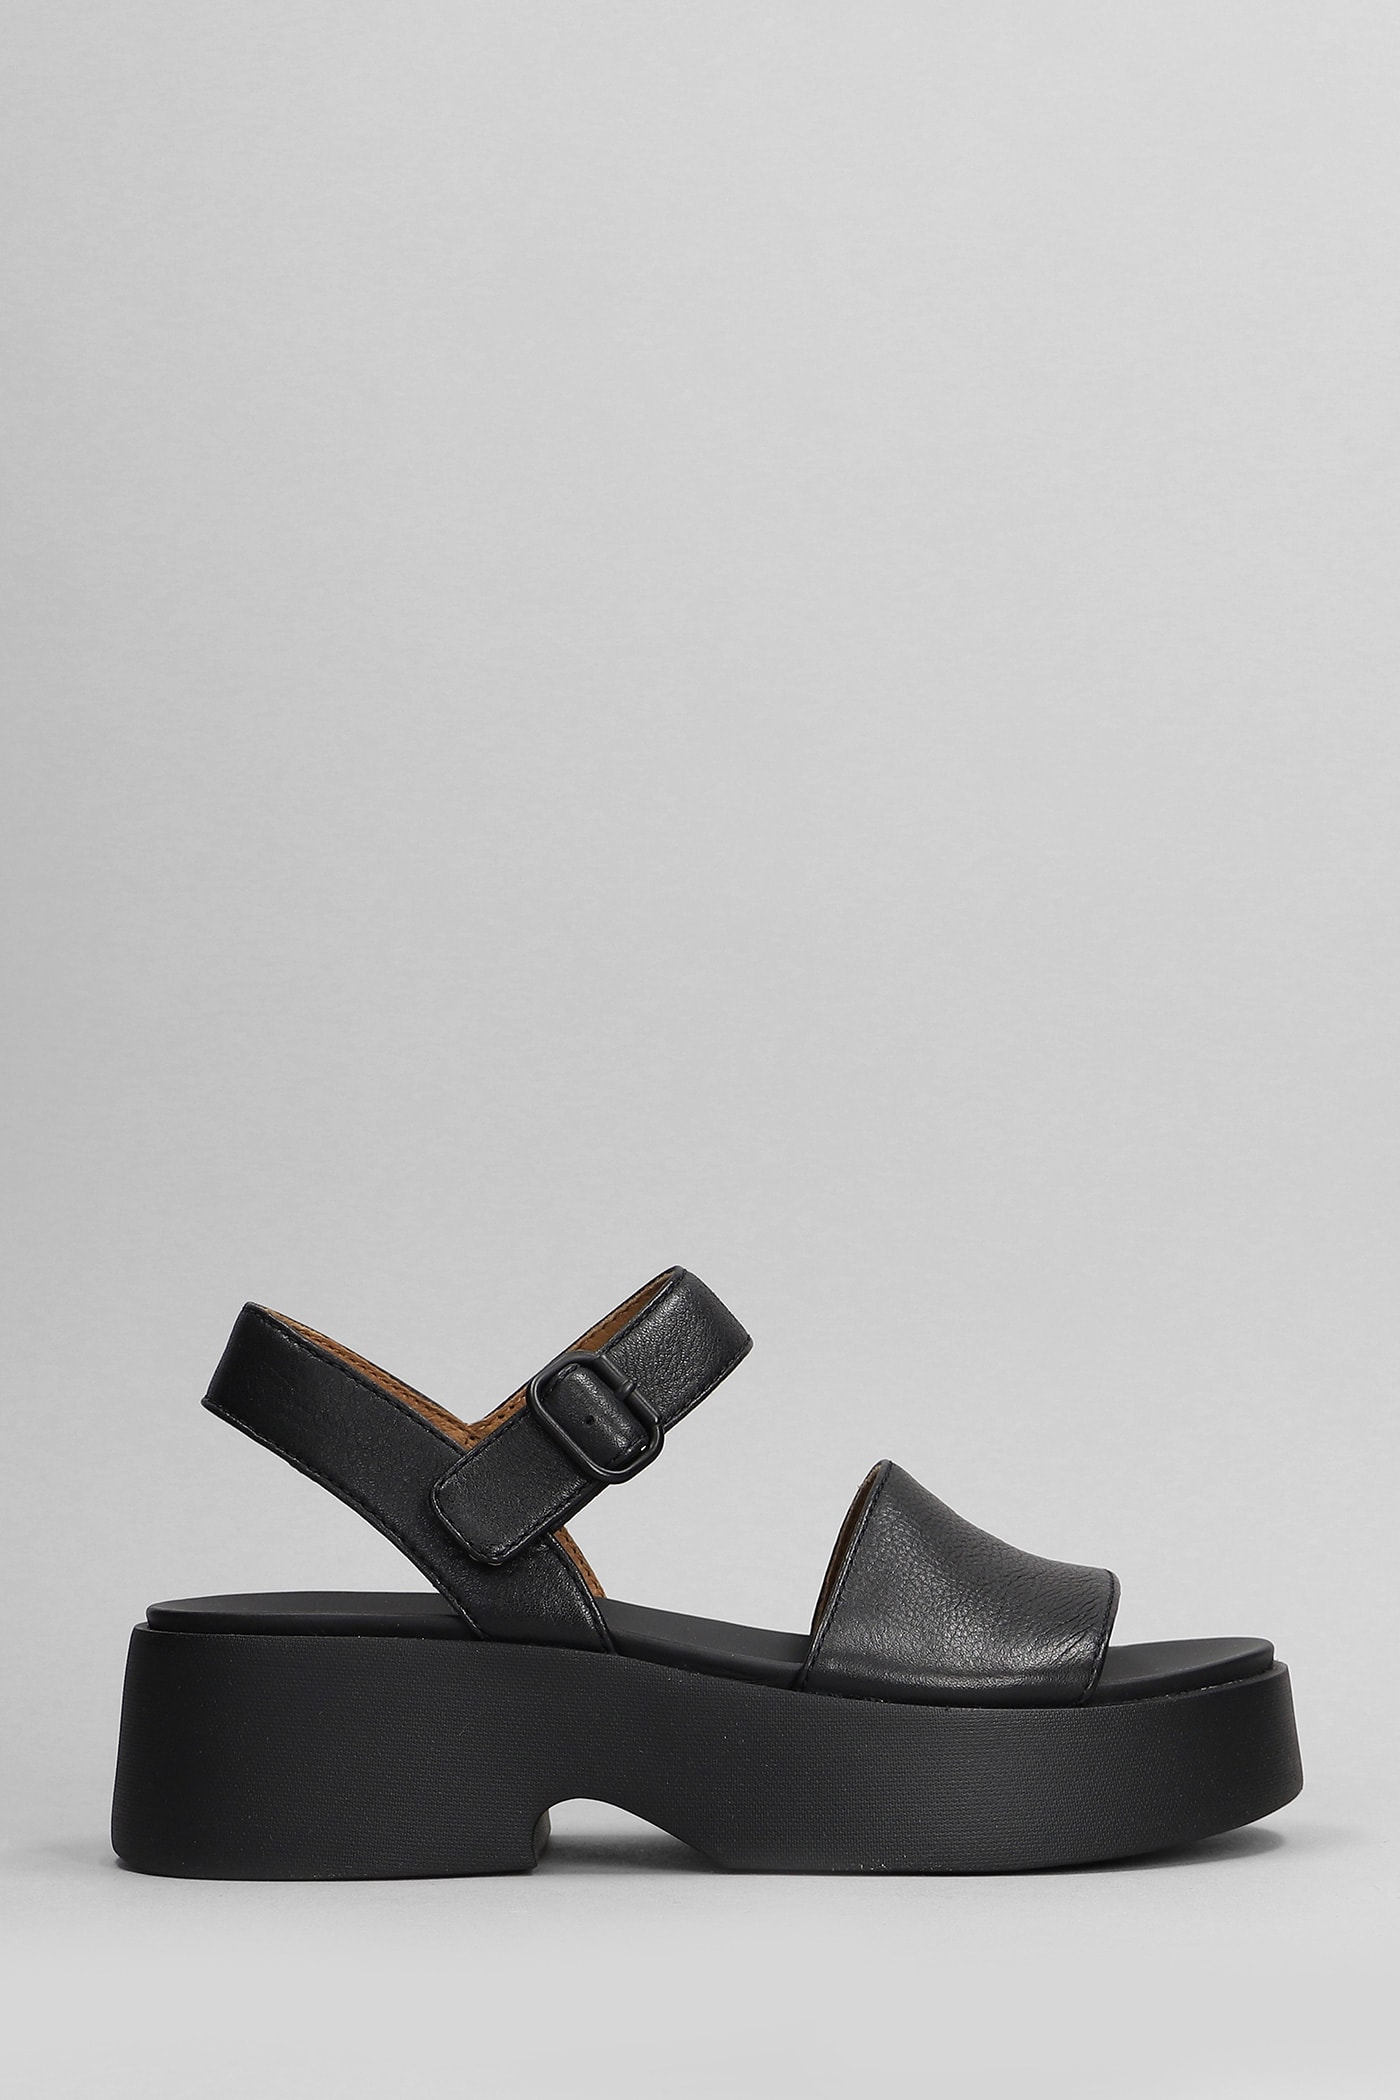 Tasha Sandals In Black Leather